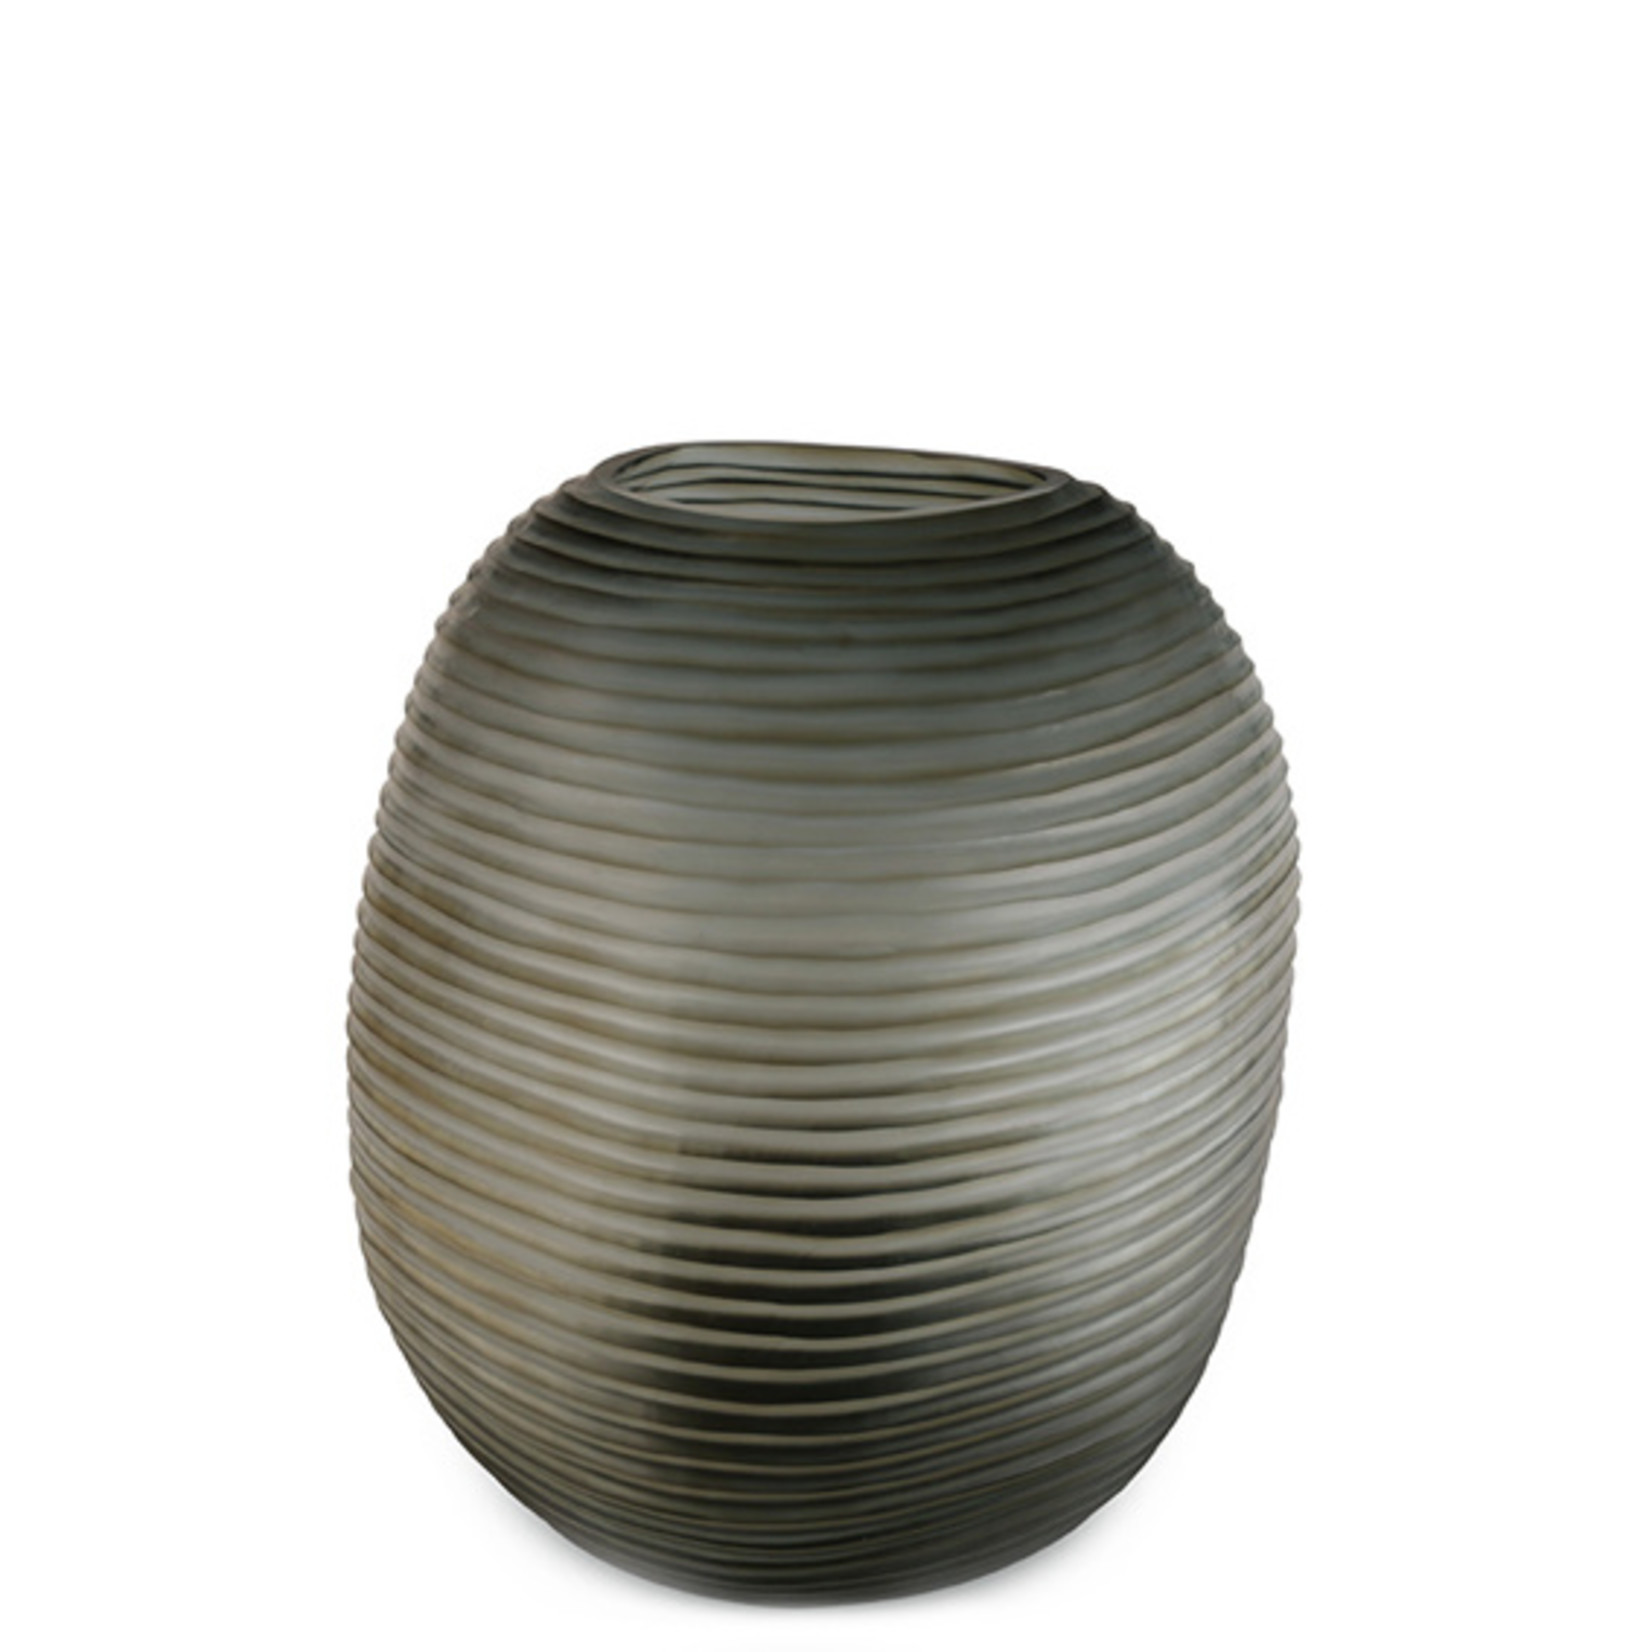 Guaxs Vase Patara Round | Indigo / Smoke Gray